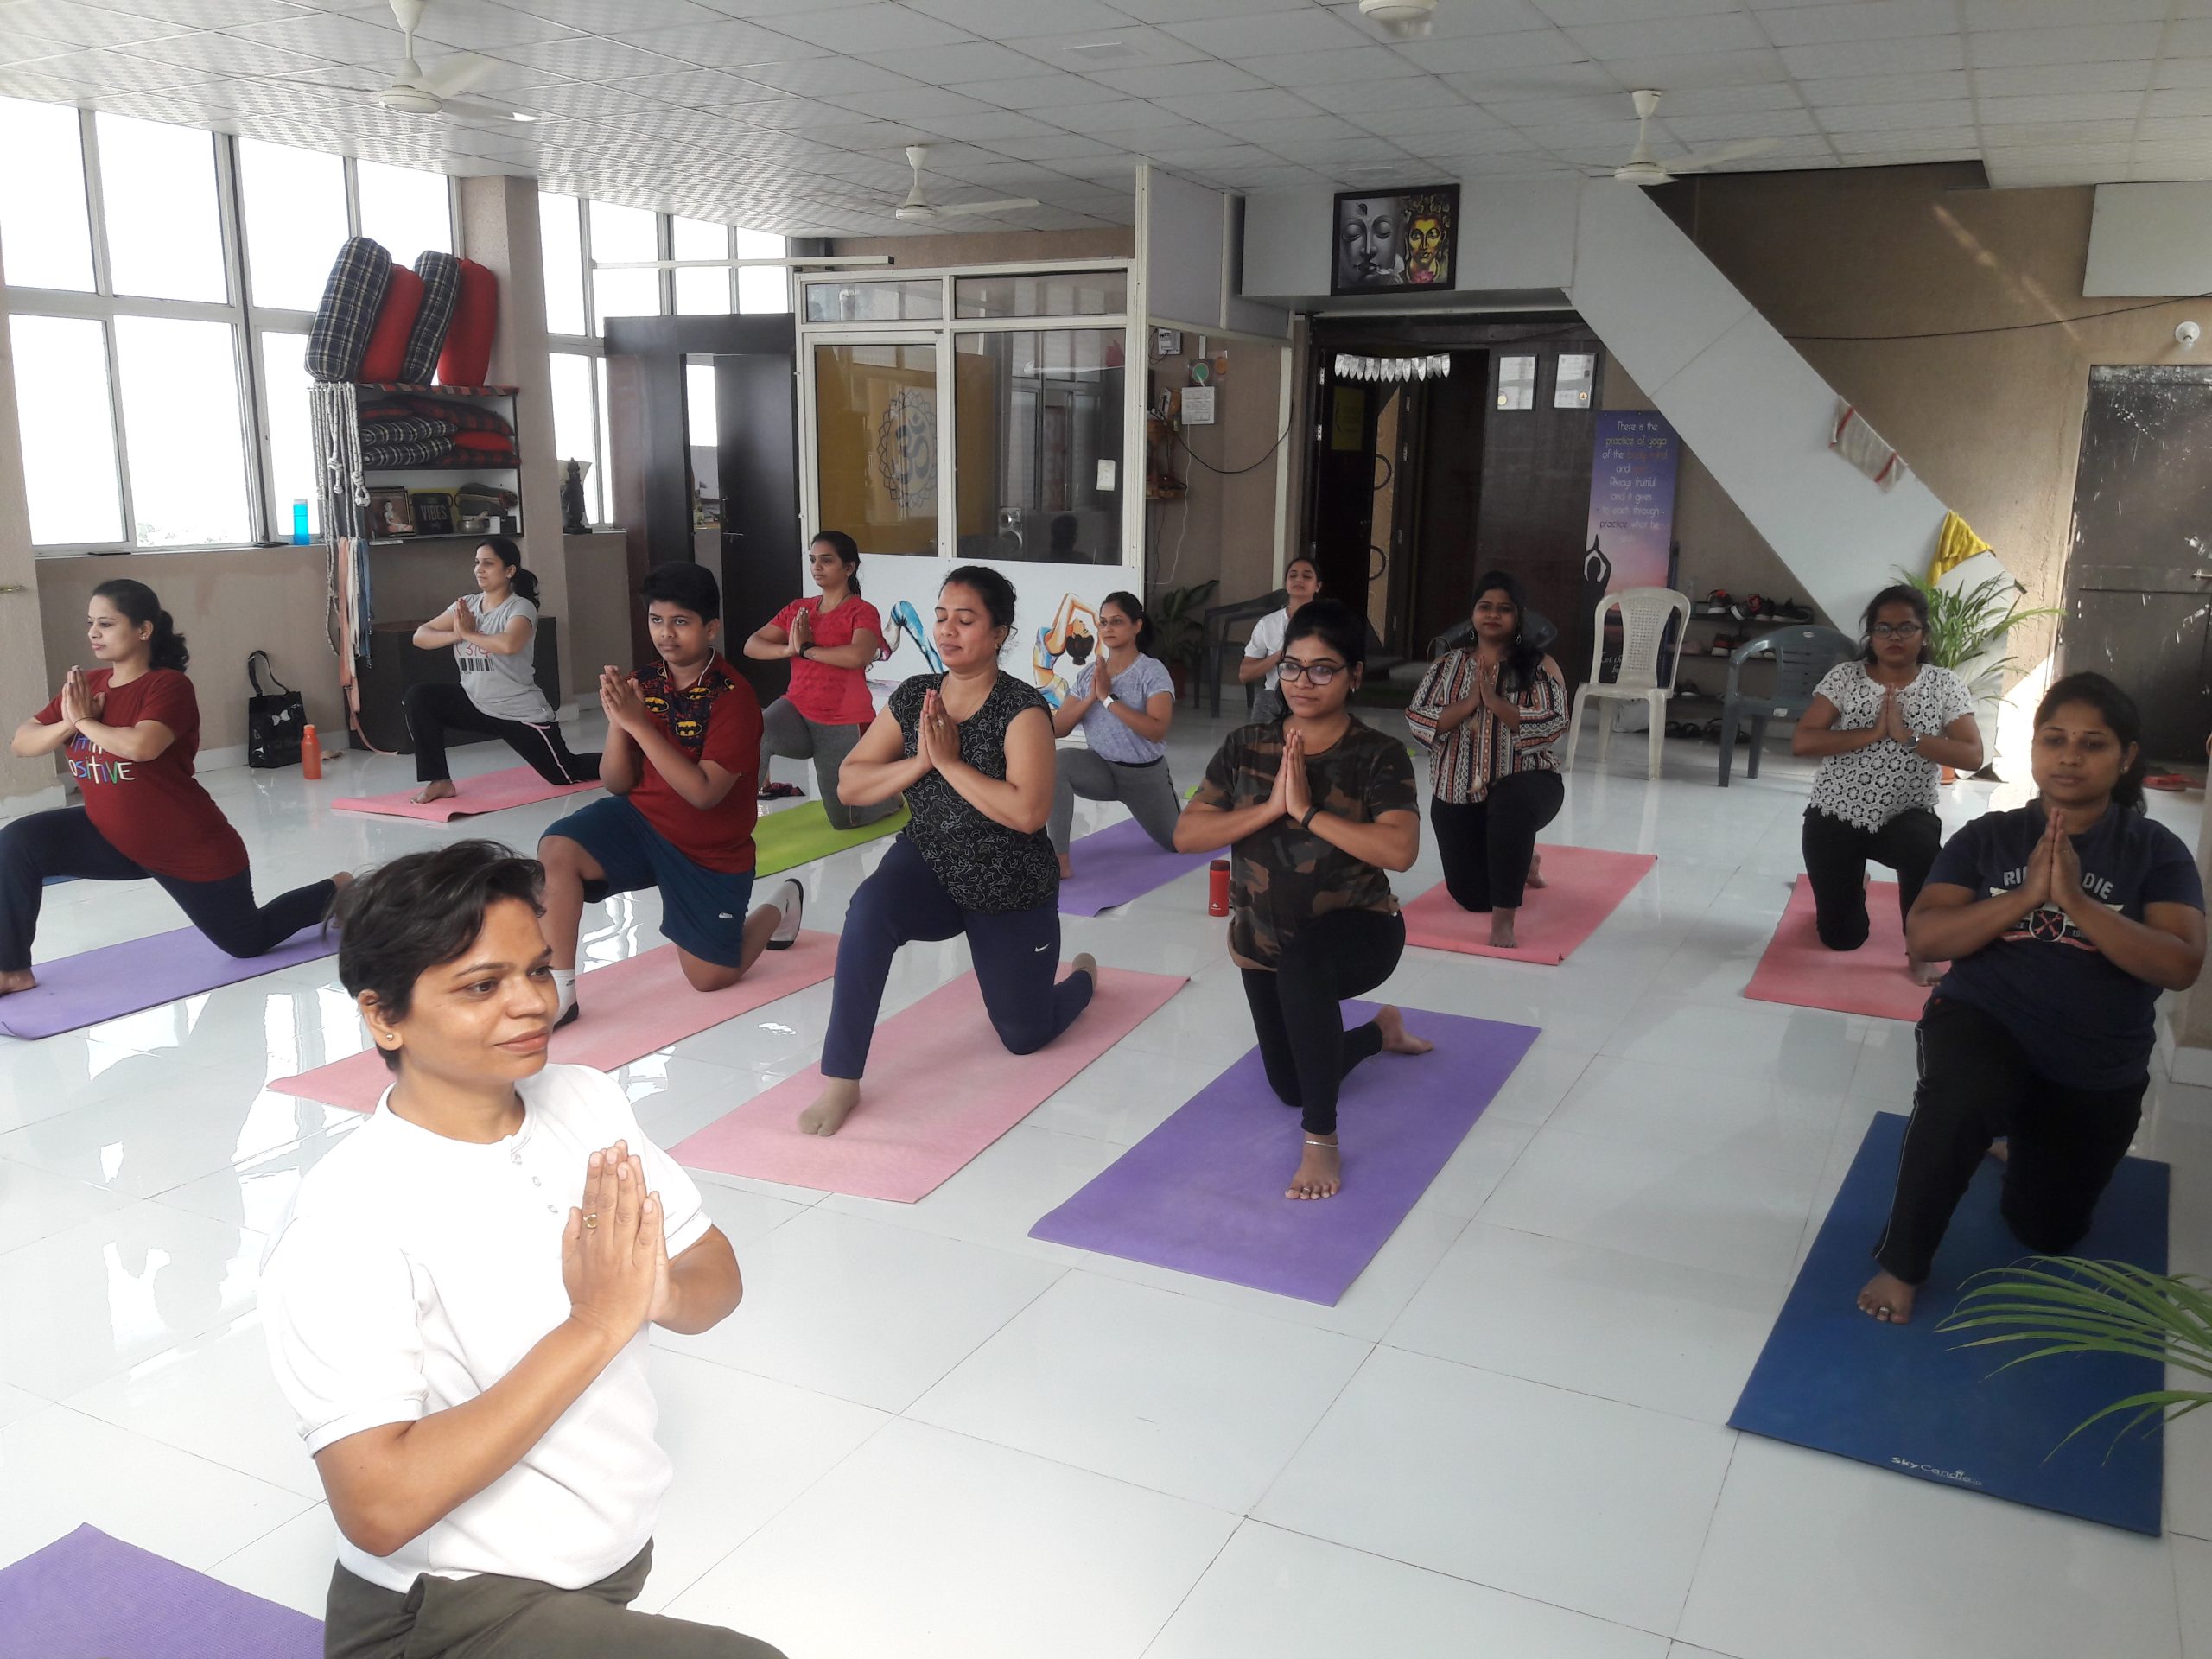 india yoga teacher training